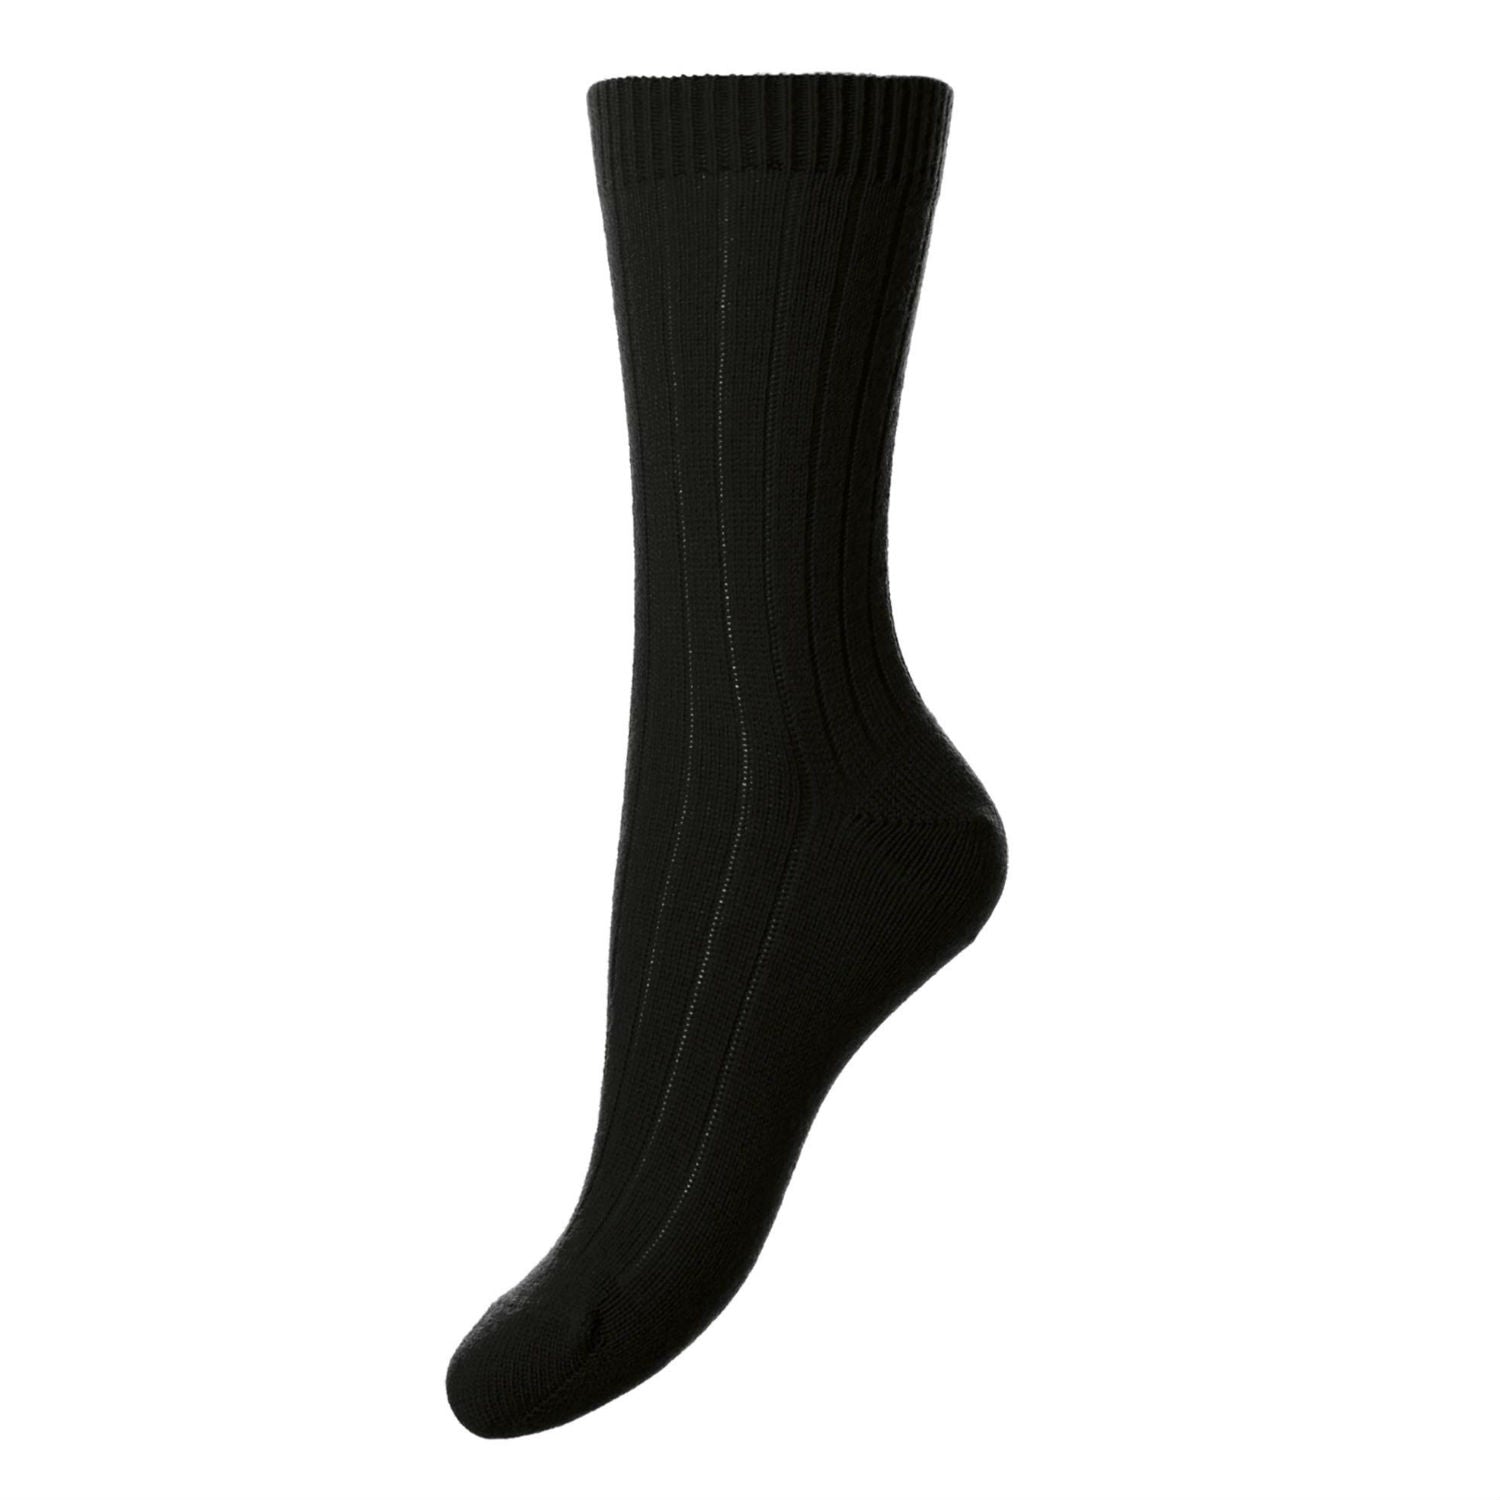 Pantherella women's socks - cashmere - black